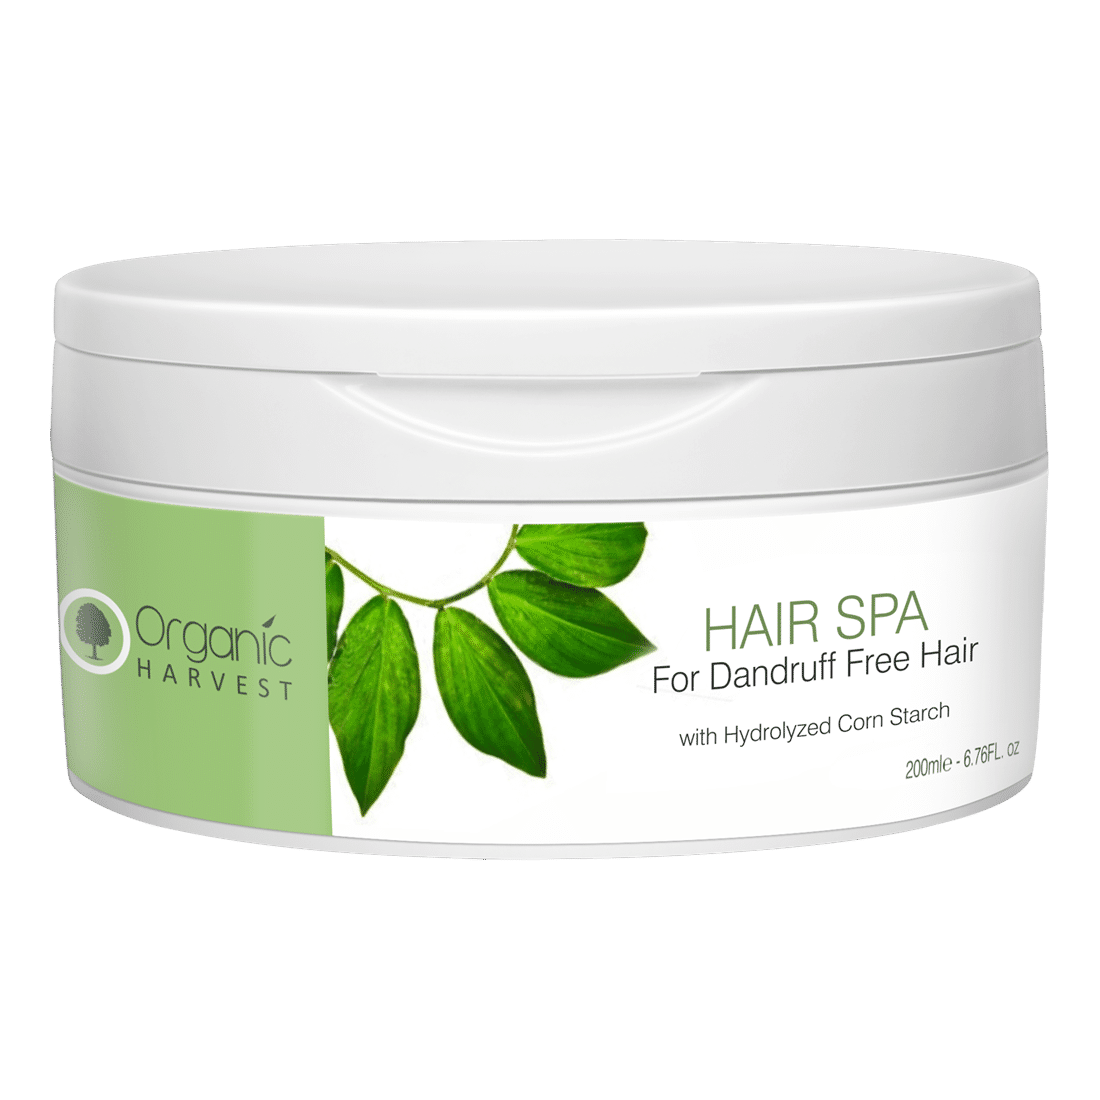 Organic Harvest Hair Spa For Dandruff Free Hair